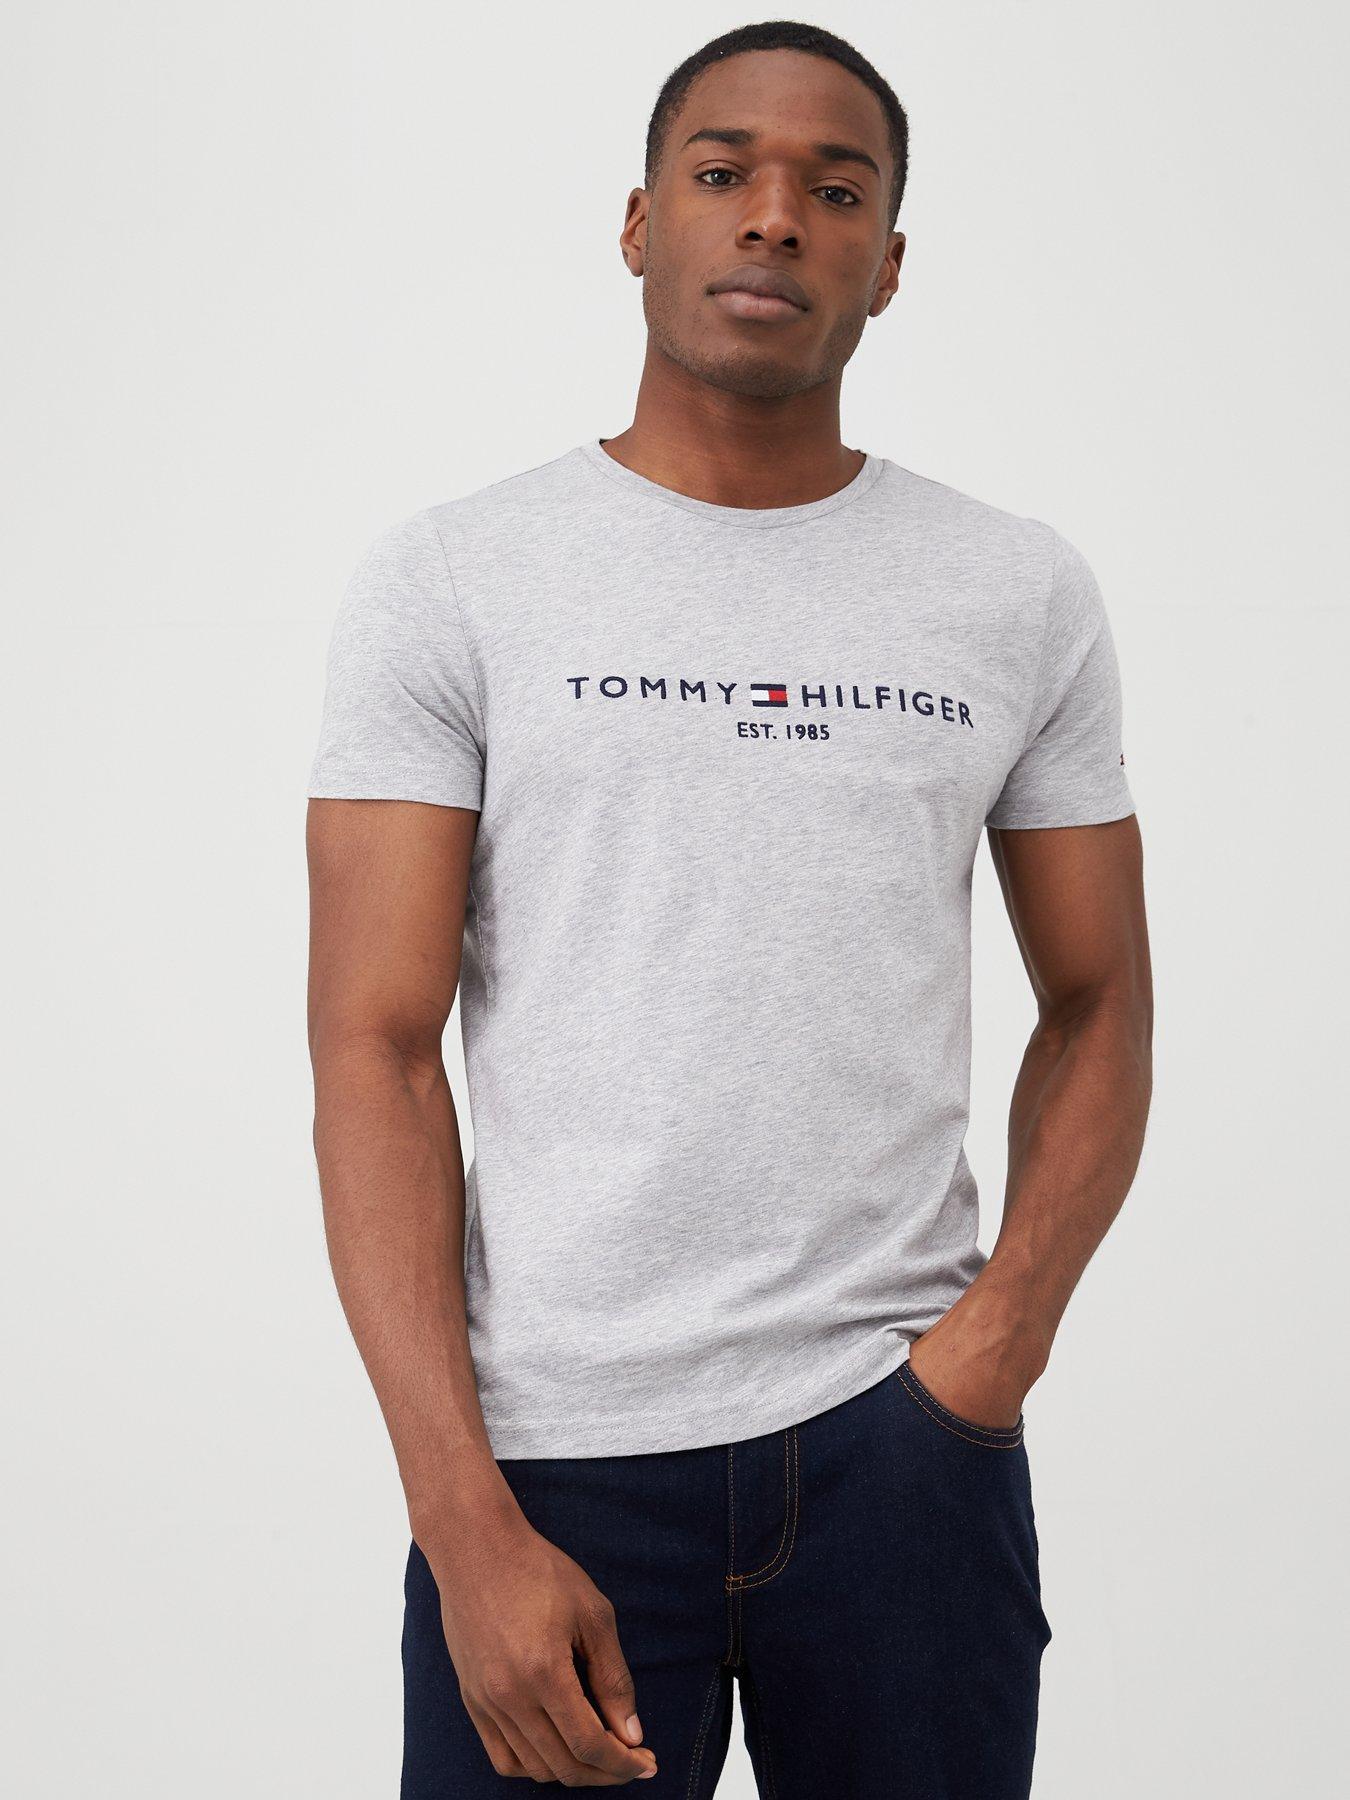 tommy hilfiger mens logo t shirt